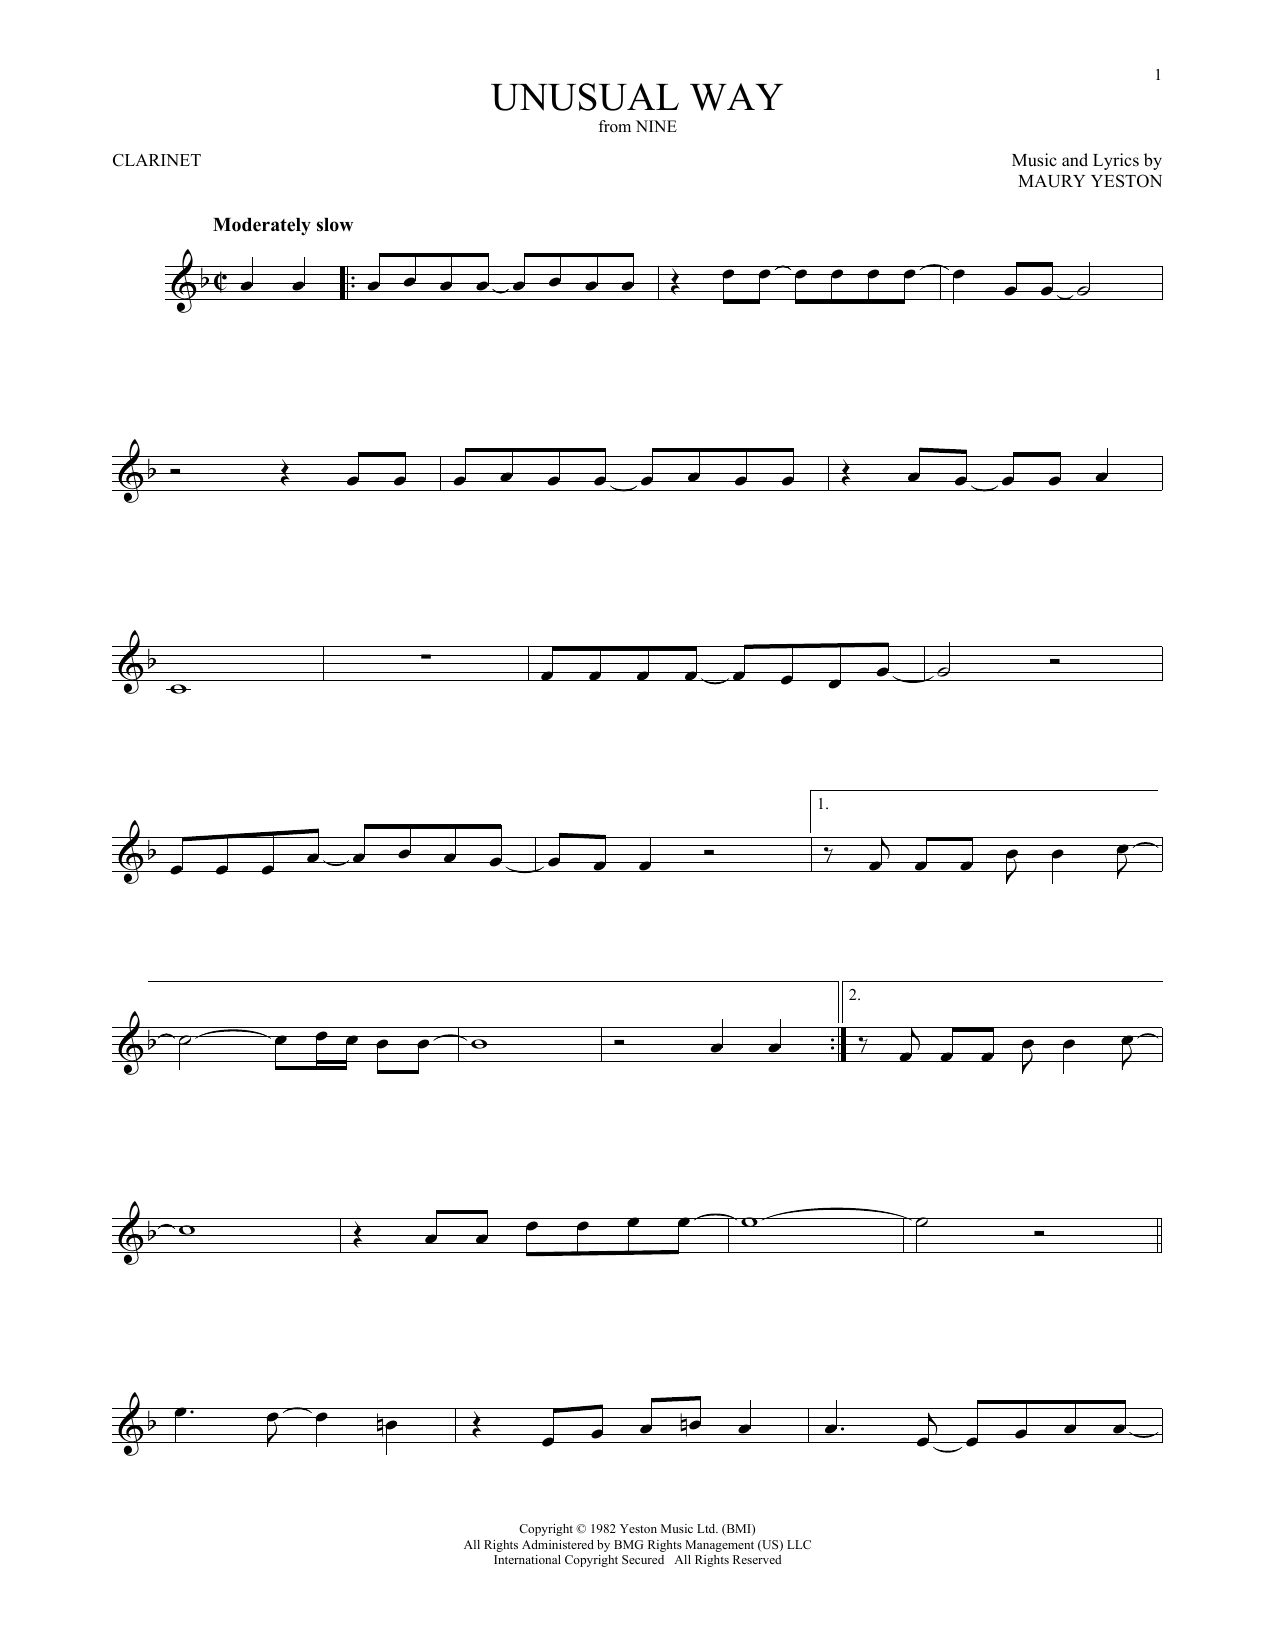 Linda Eder Unusual Way Sheet Music Notes & Chords for Clarinet - Download or Print PDF